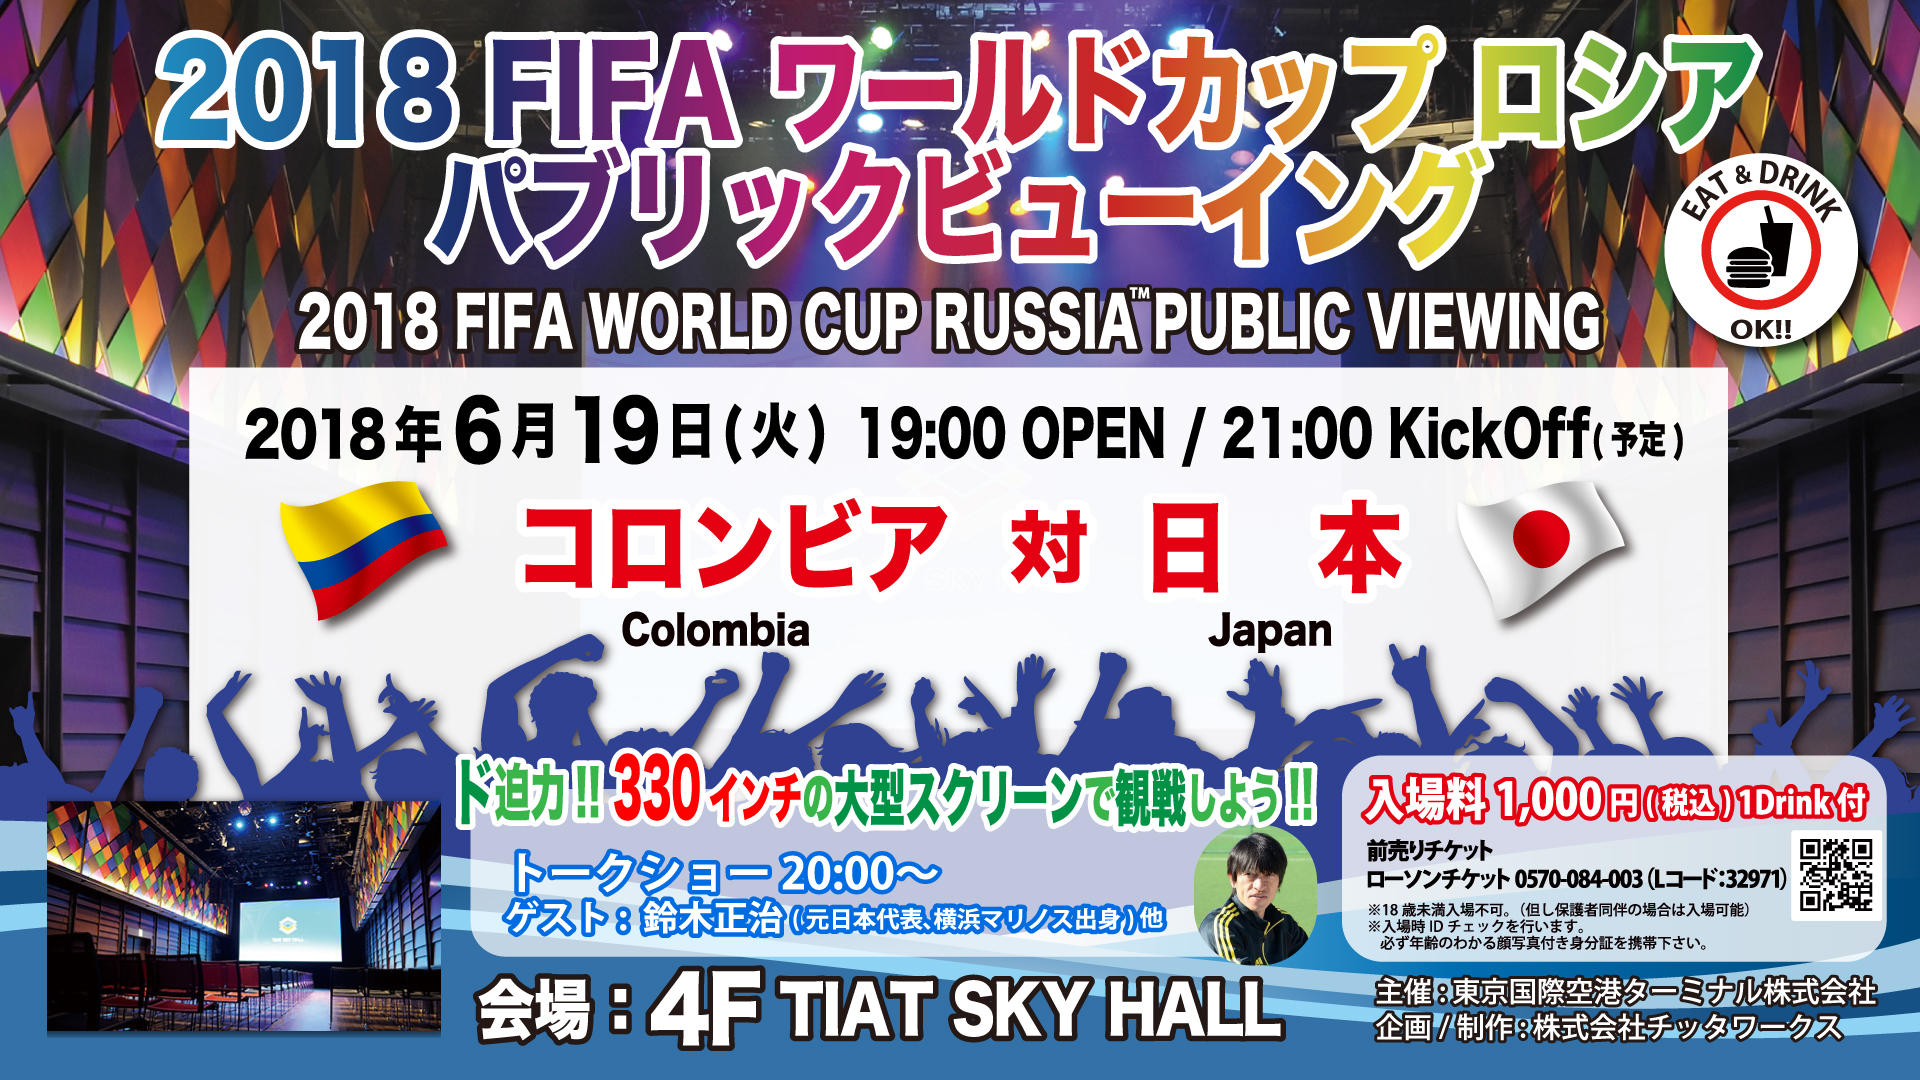 18 Fifa ワールドカップ ロシア パブリックビューイング 東京のイベントスペース Tiat Sky Hall